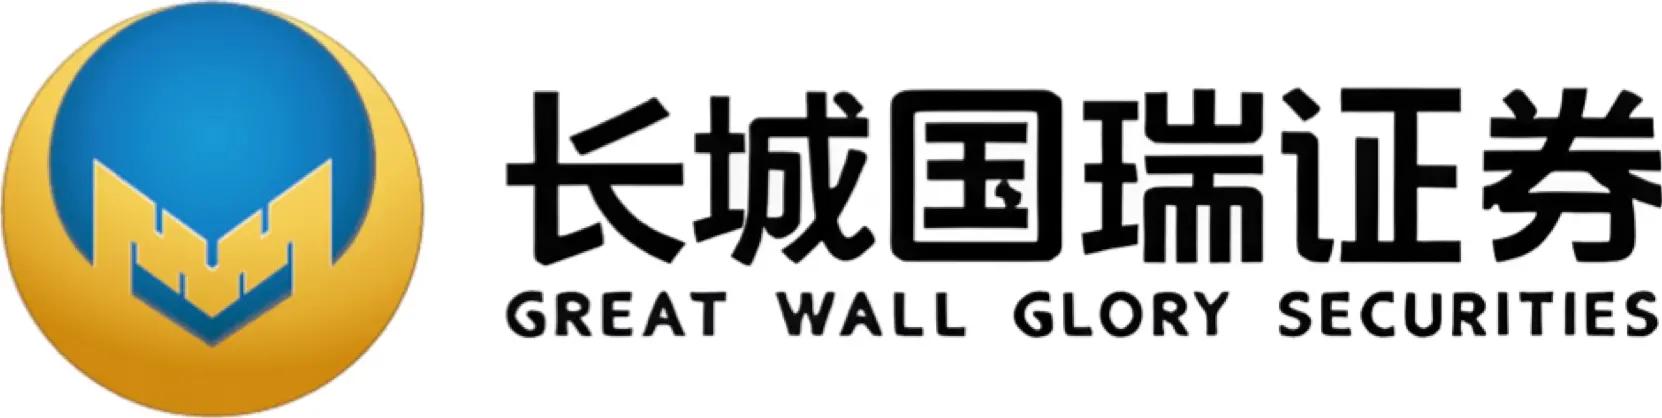 Great Wall Glory Securities